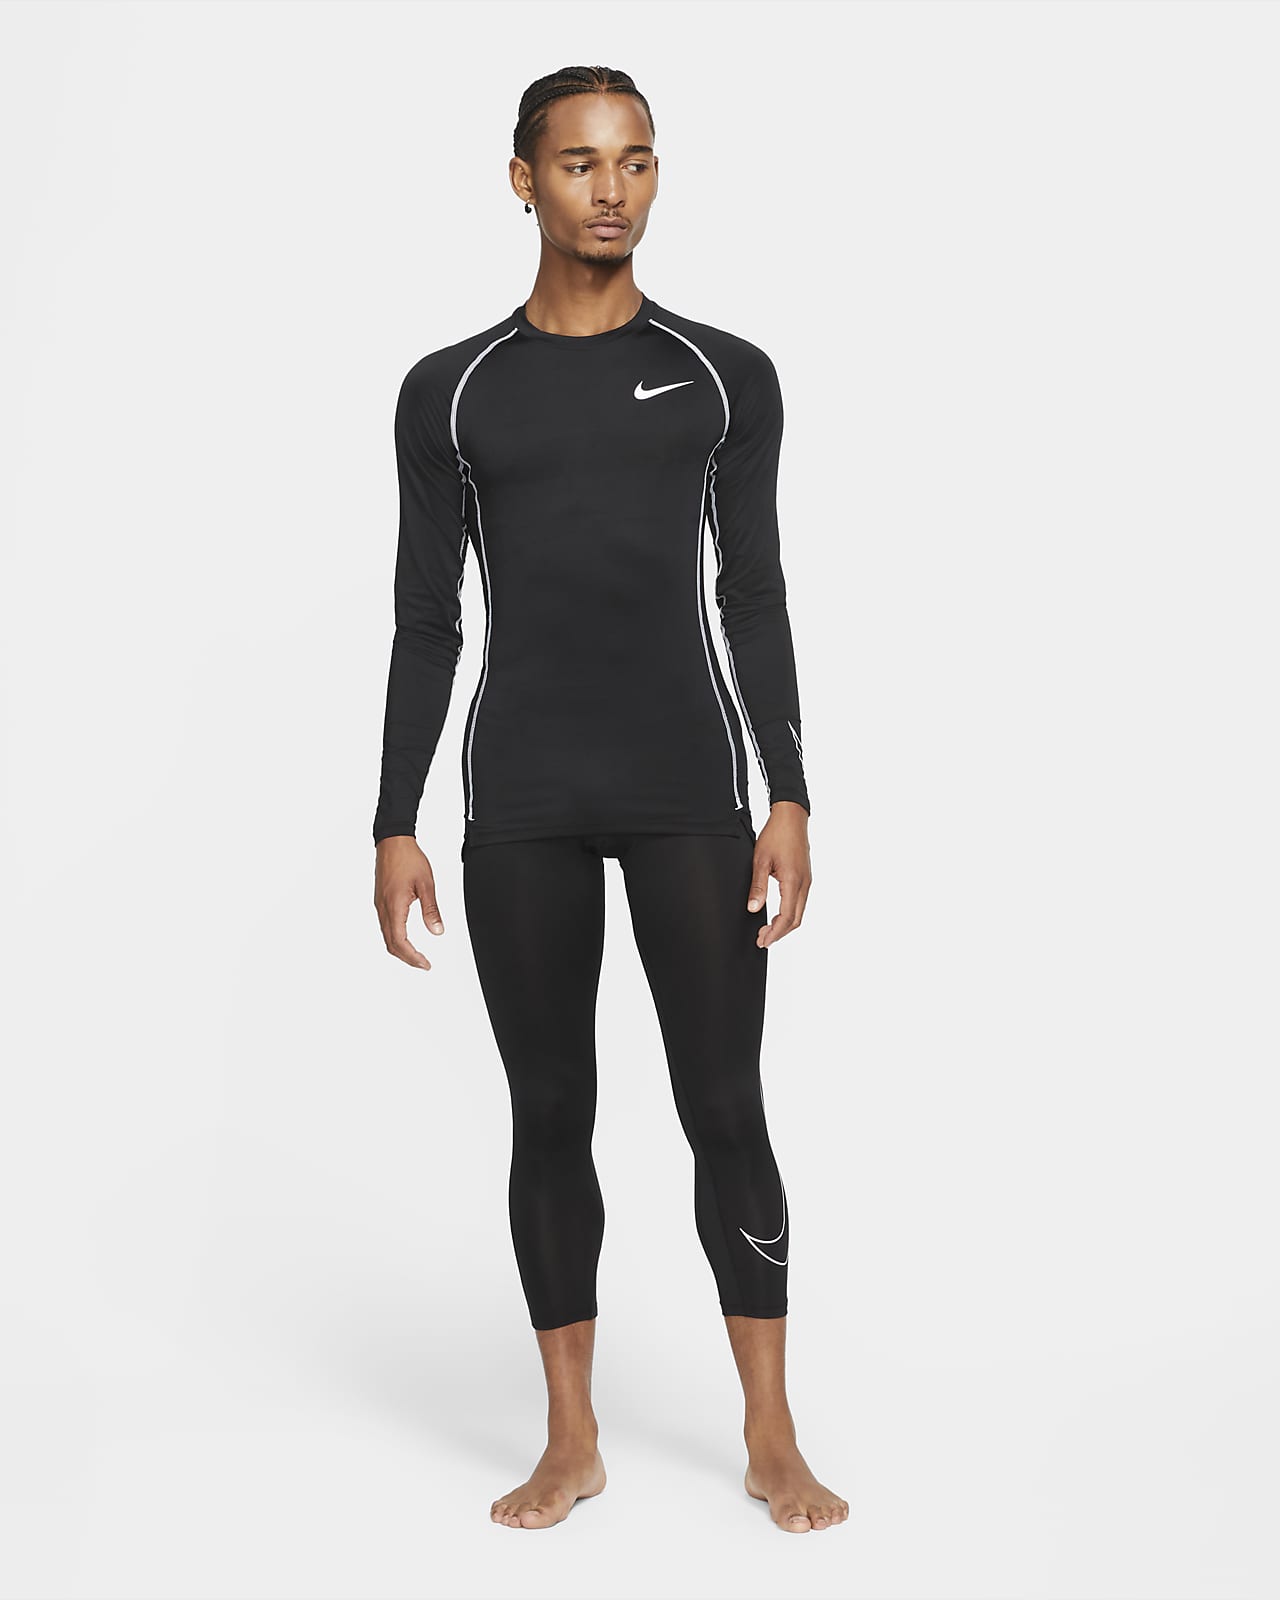  Nike Pro Dri-FIT Men's Tights(Black/White, Small